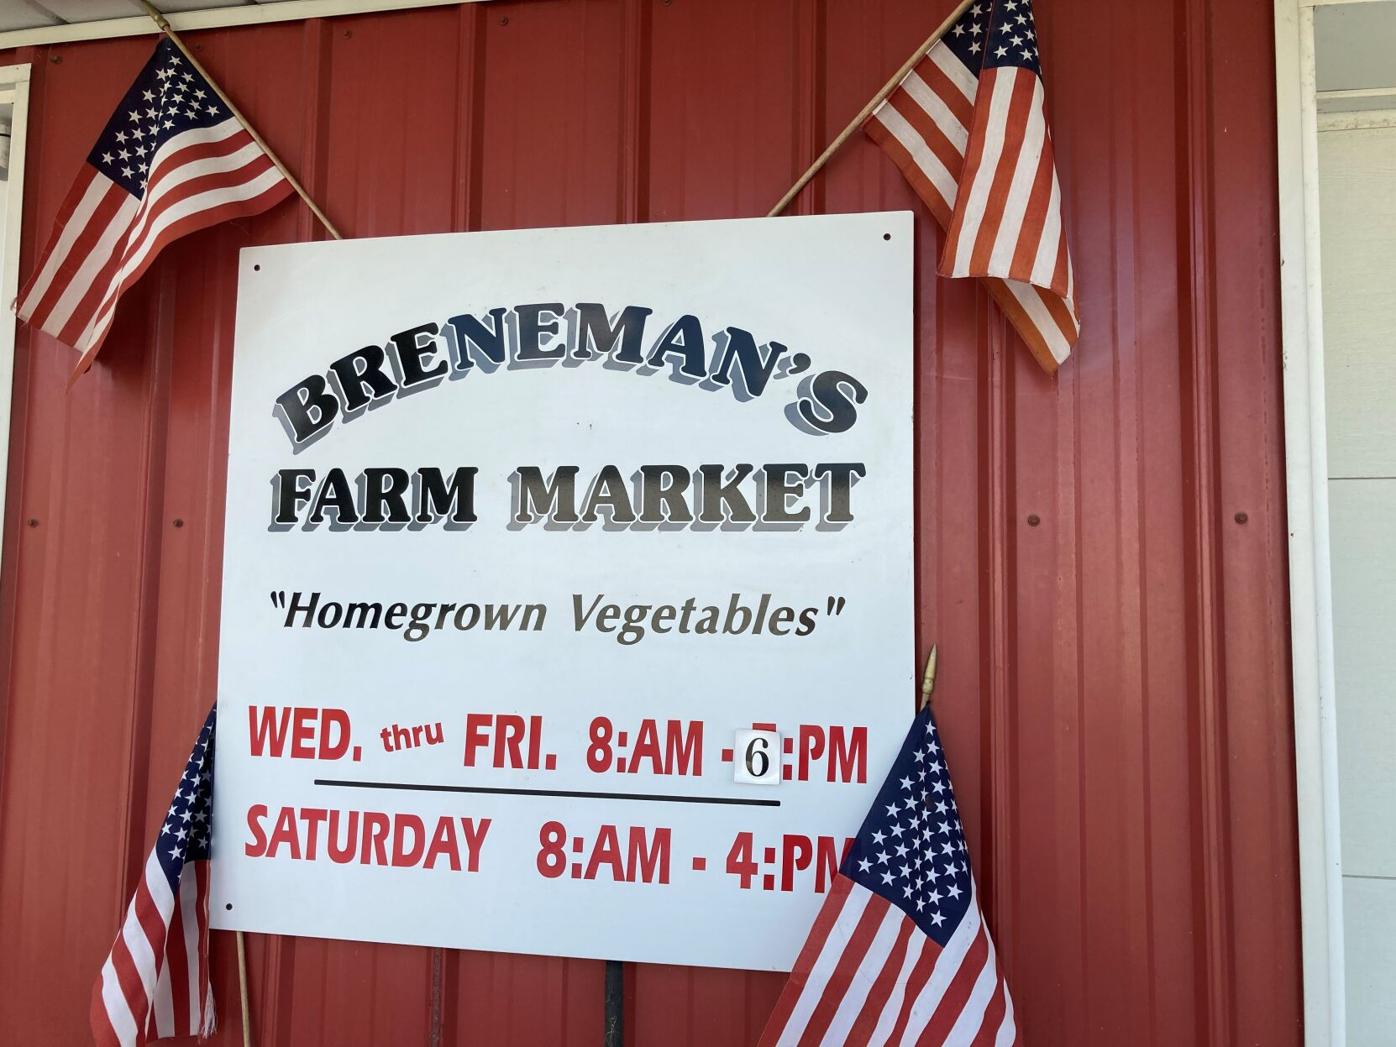 Breneman's Farm Market